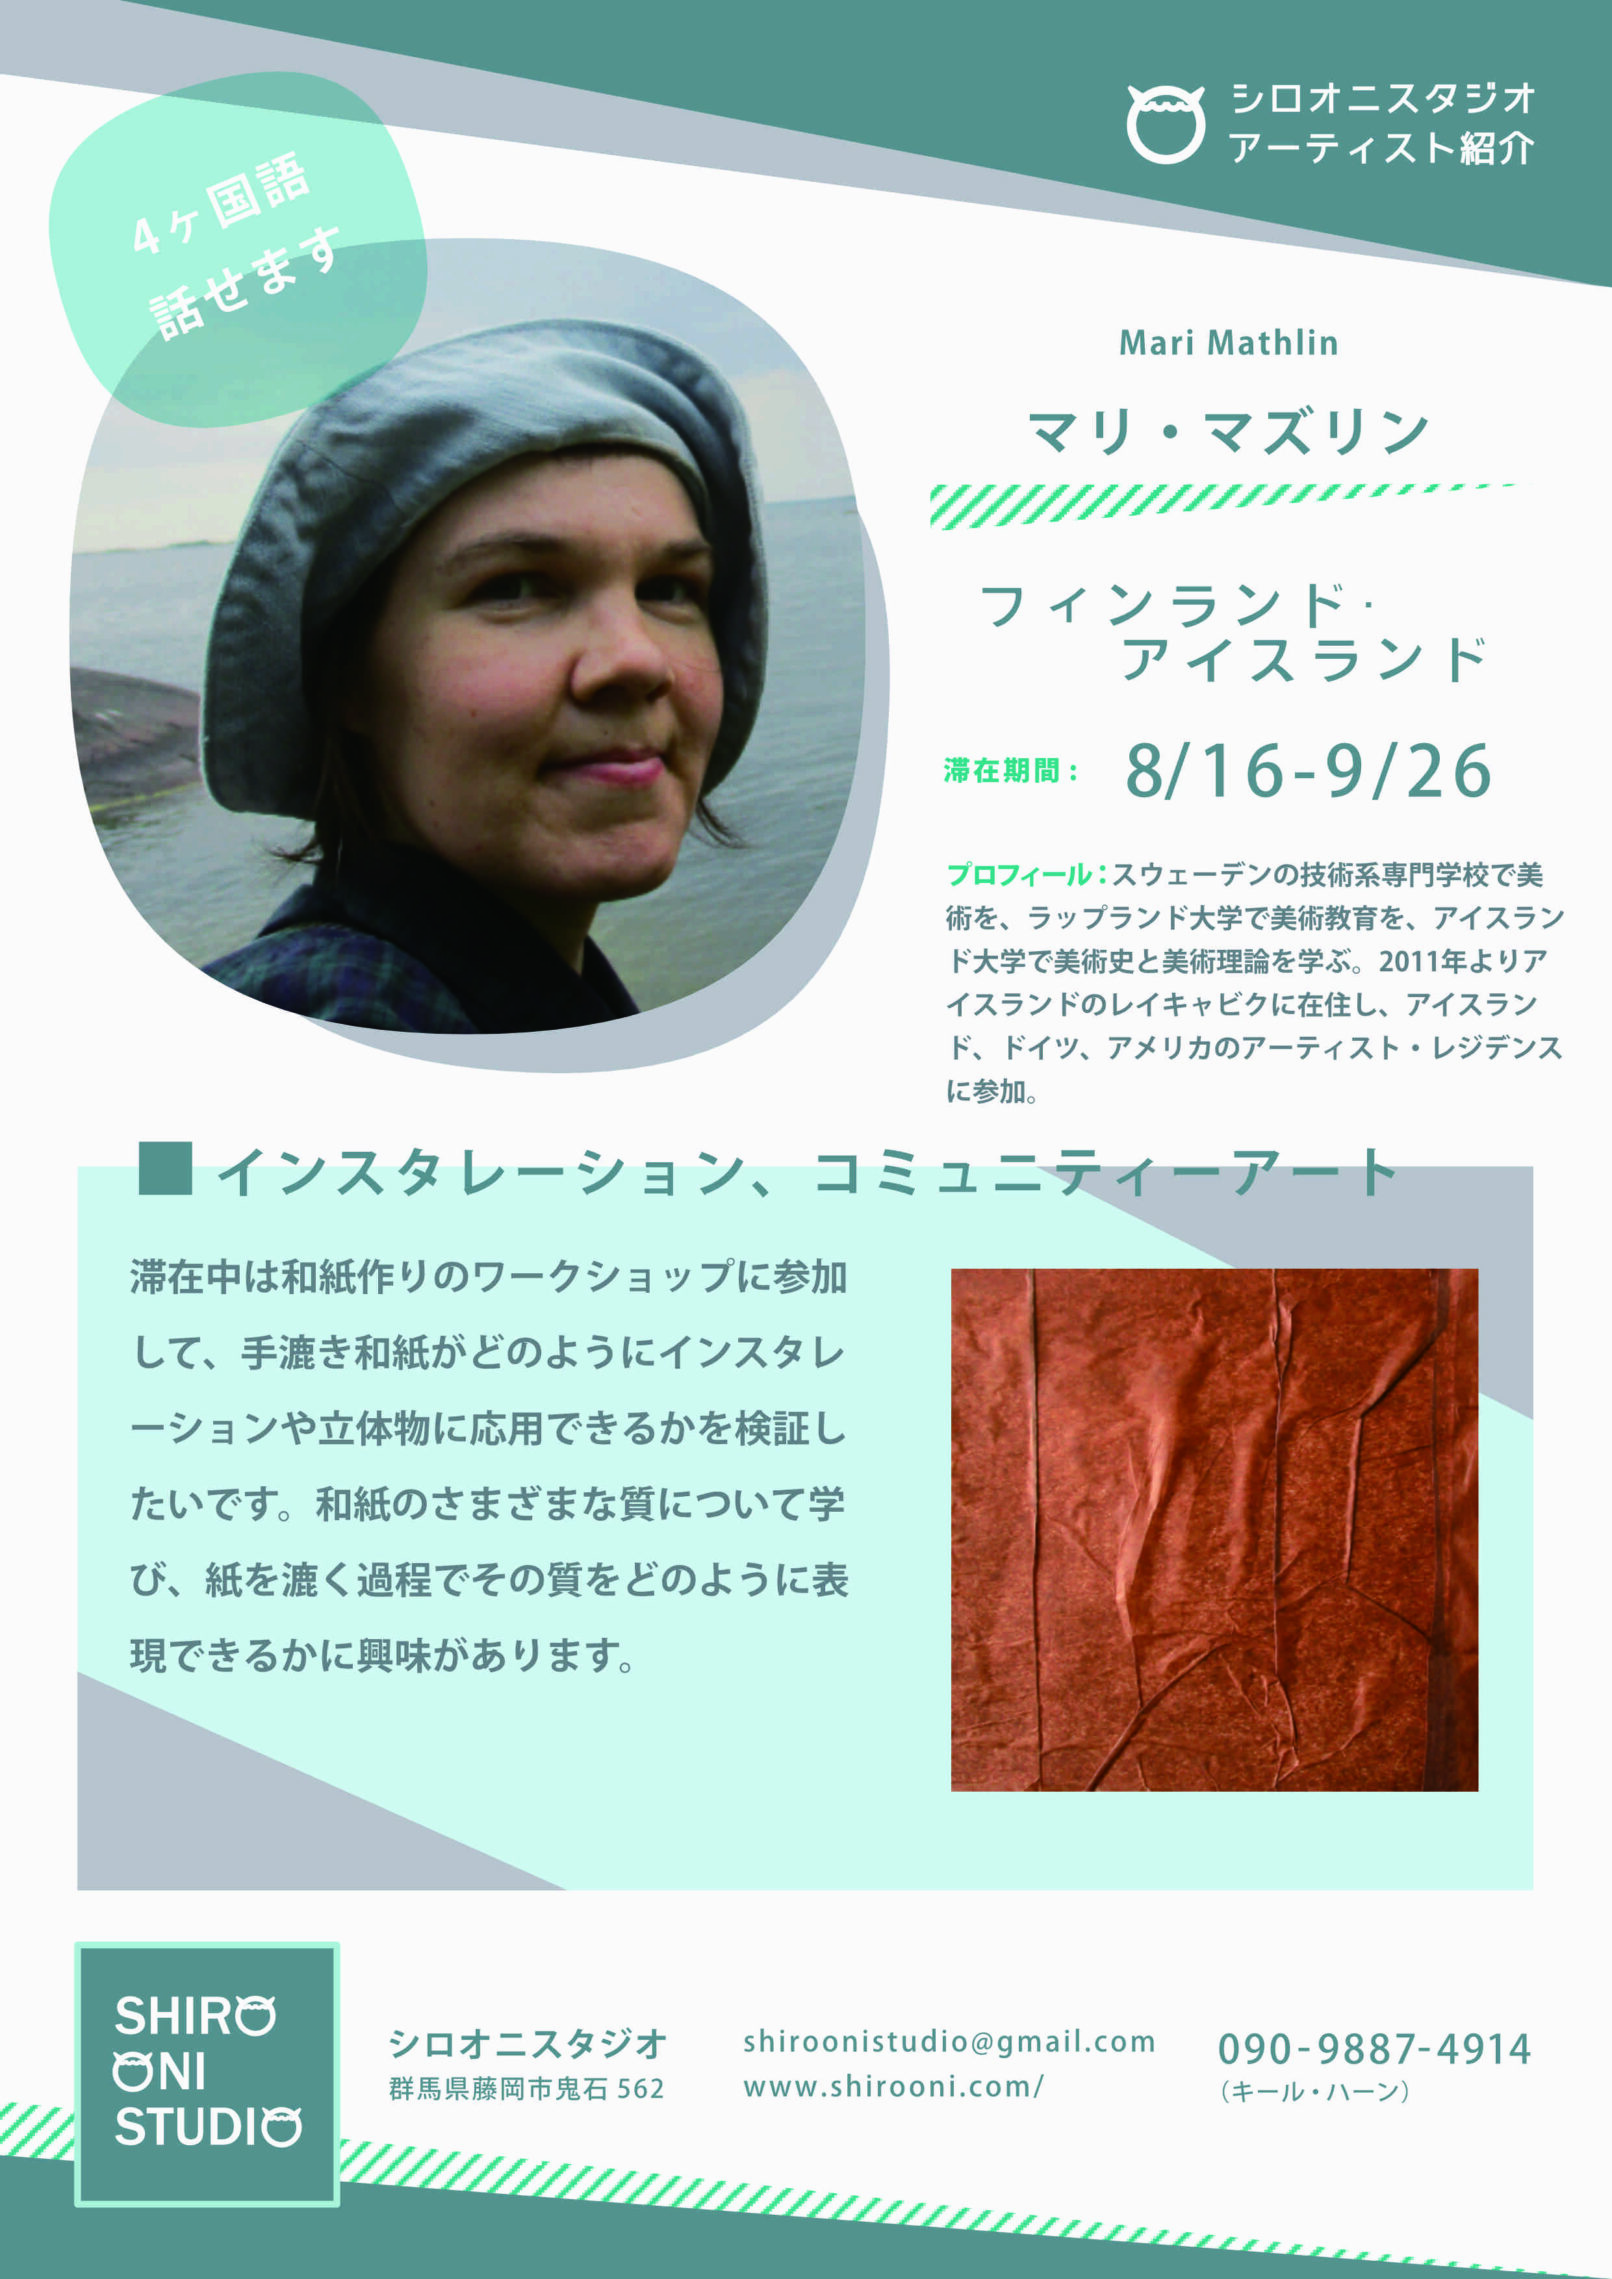 Mari Mathlin participated in the Shiro Oni Studio art residency program in Onishi Japan.